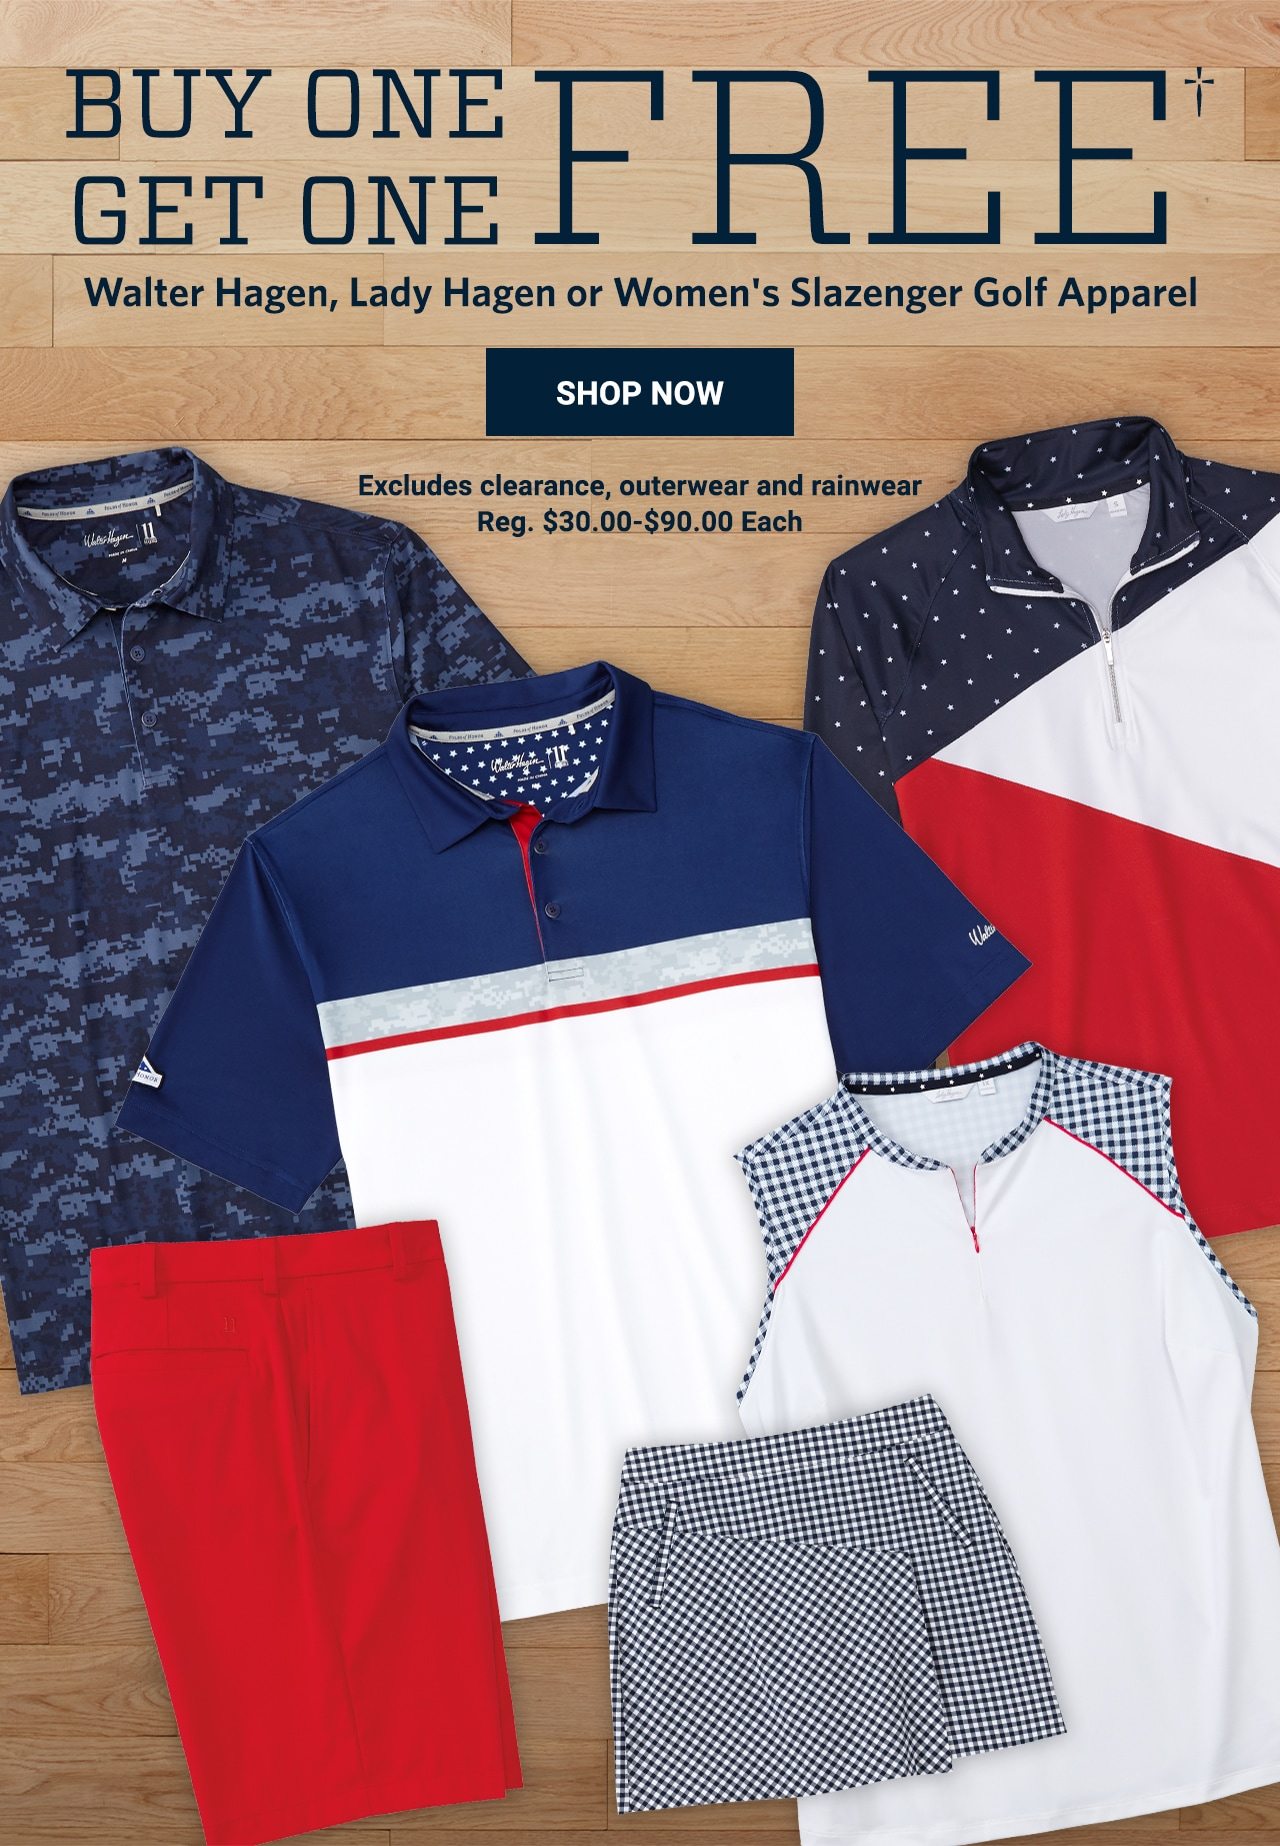 Buy One, Get One Free†. Walter Hagen, Lady Hagen or Women's Slazenger Golf Apparel. Excludes clearance, outerwear and rainwear. Reg. $30.00 to $90.00 Each. Shop Now.